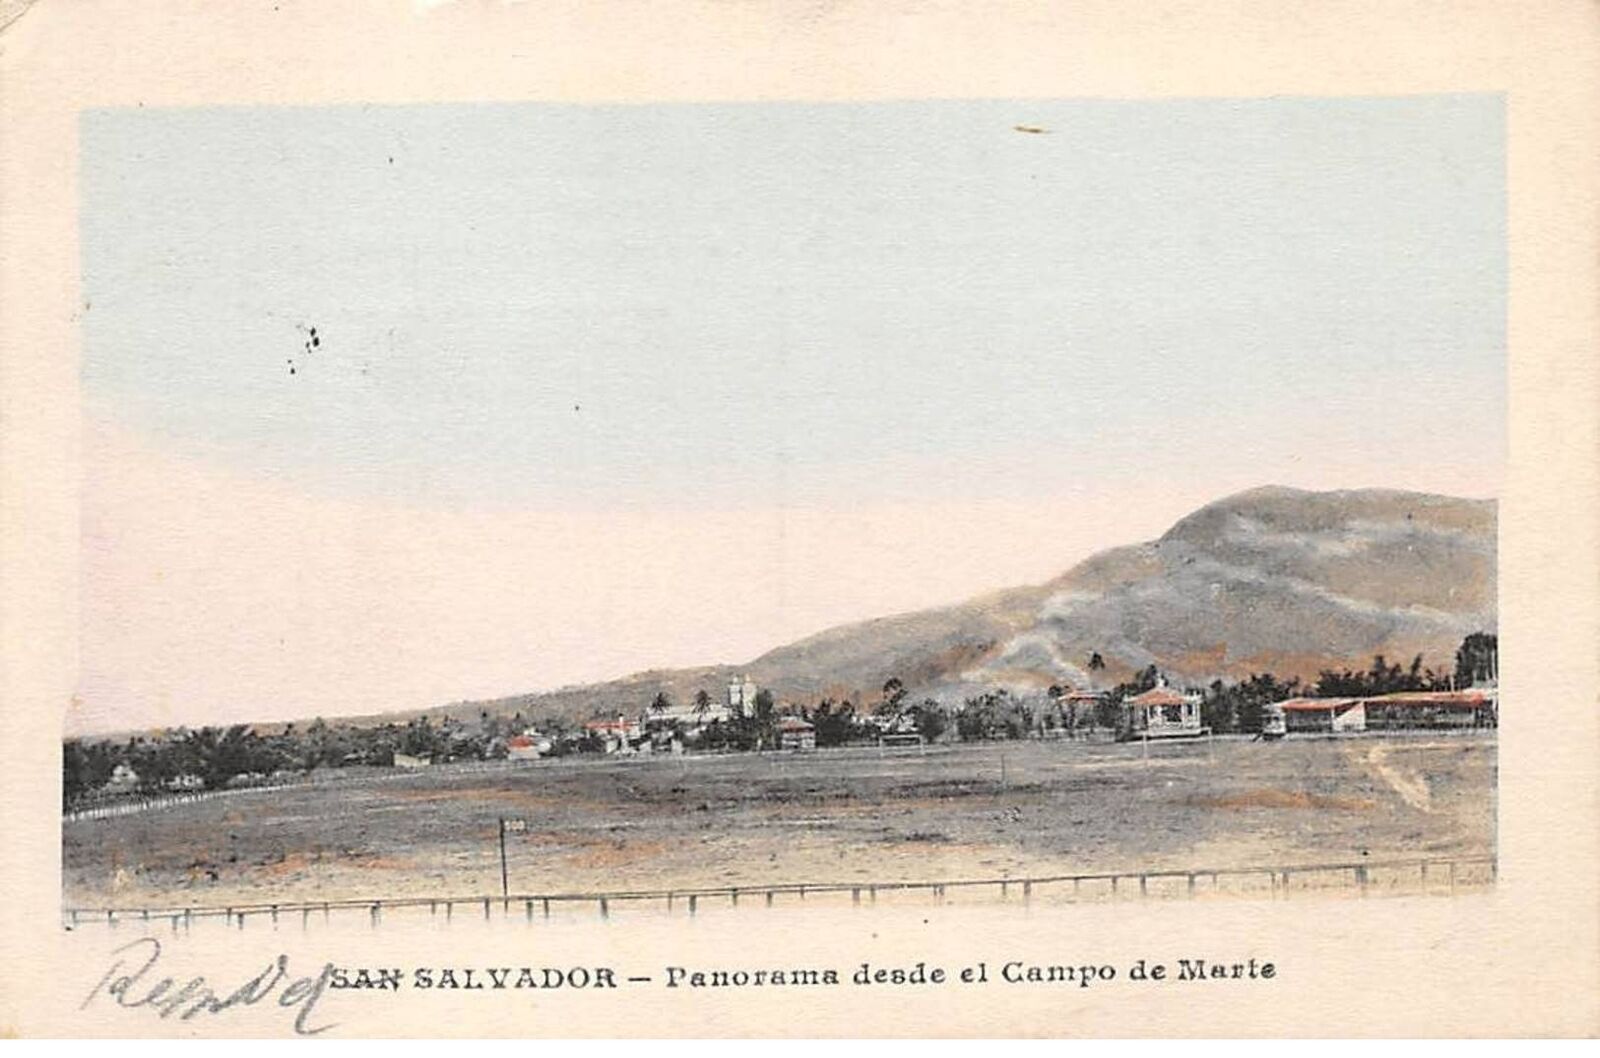 San Salvador - n°77309 - Panorama dende el Campo de Marie - map with stamp